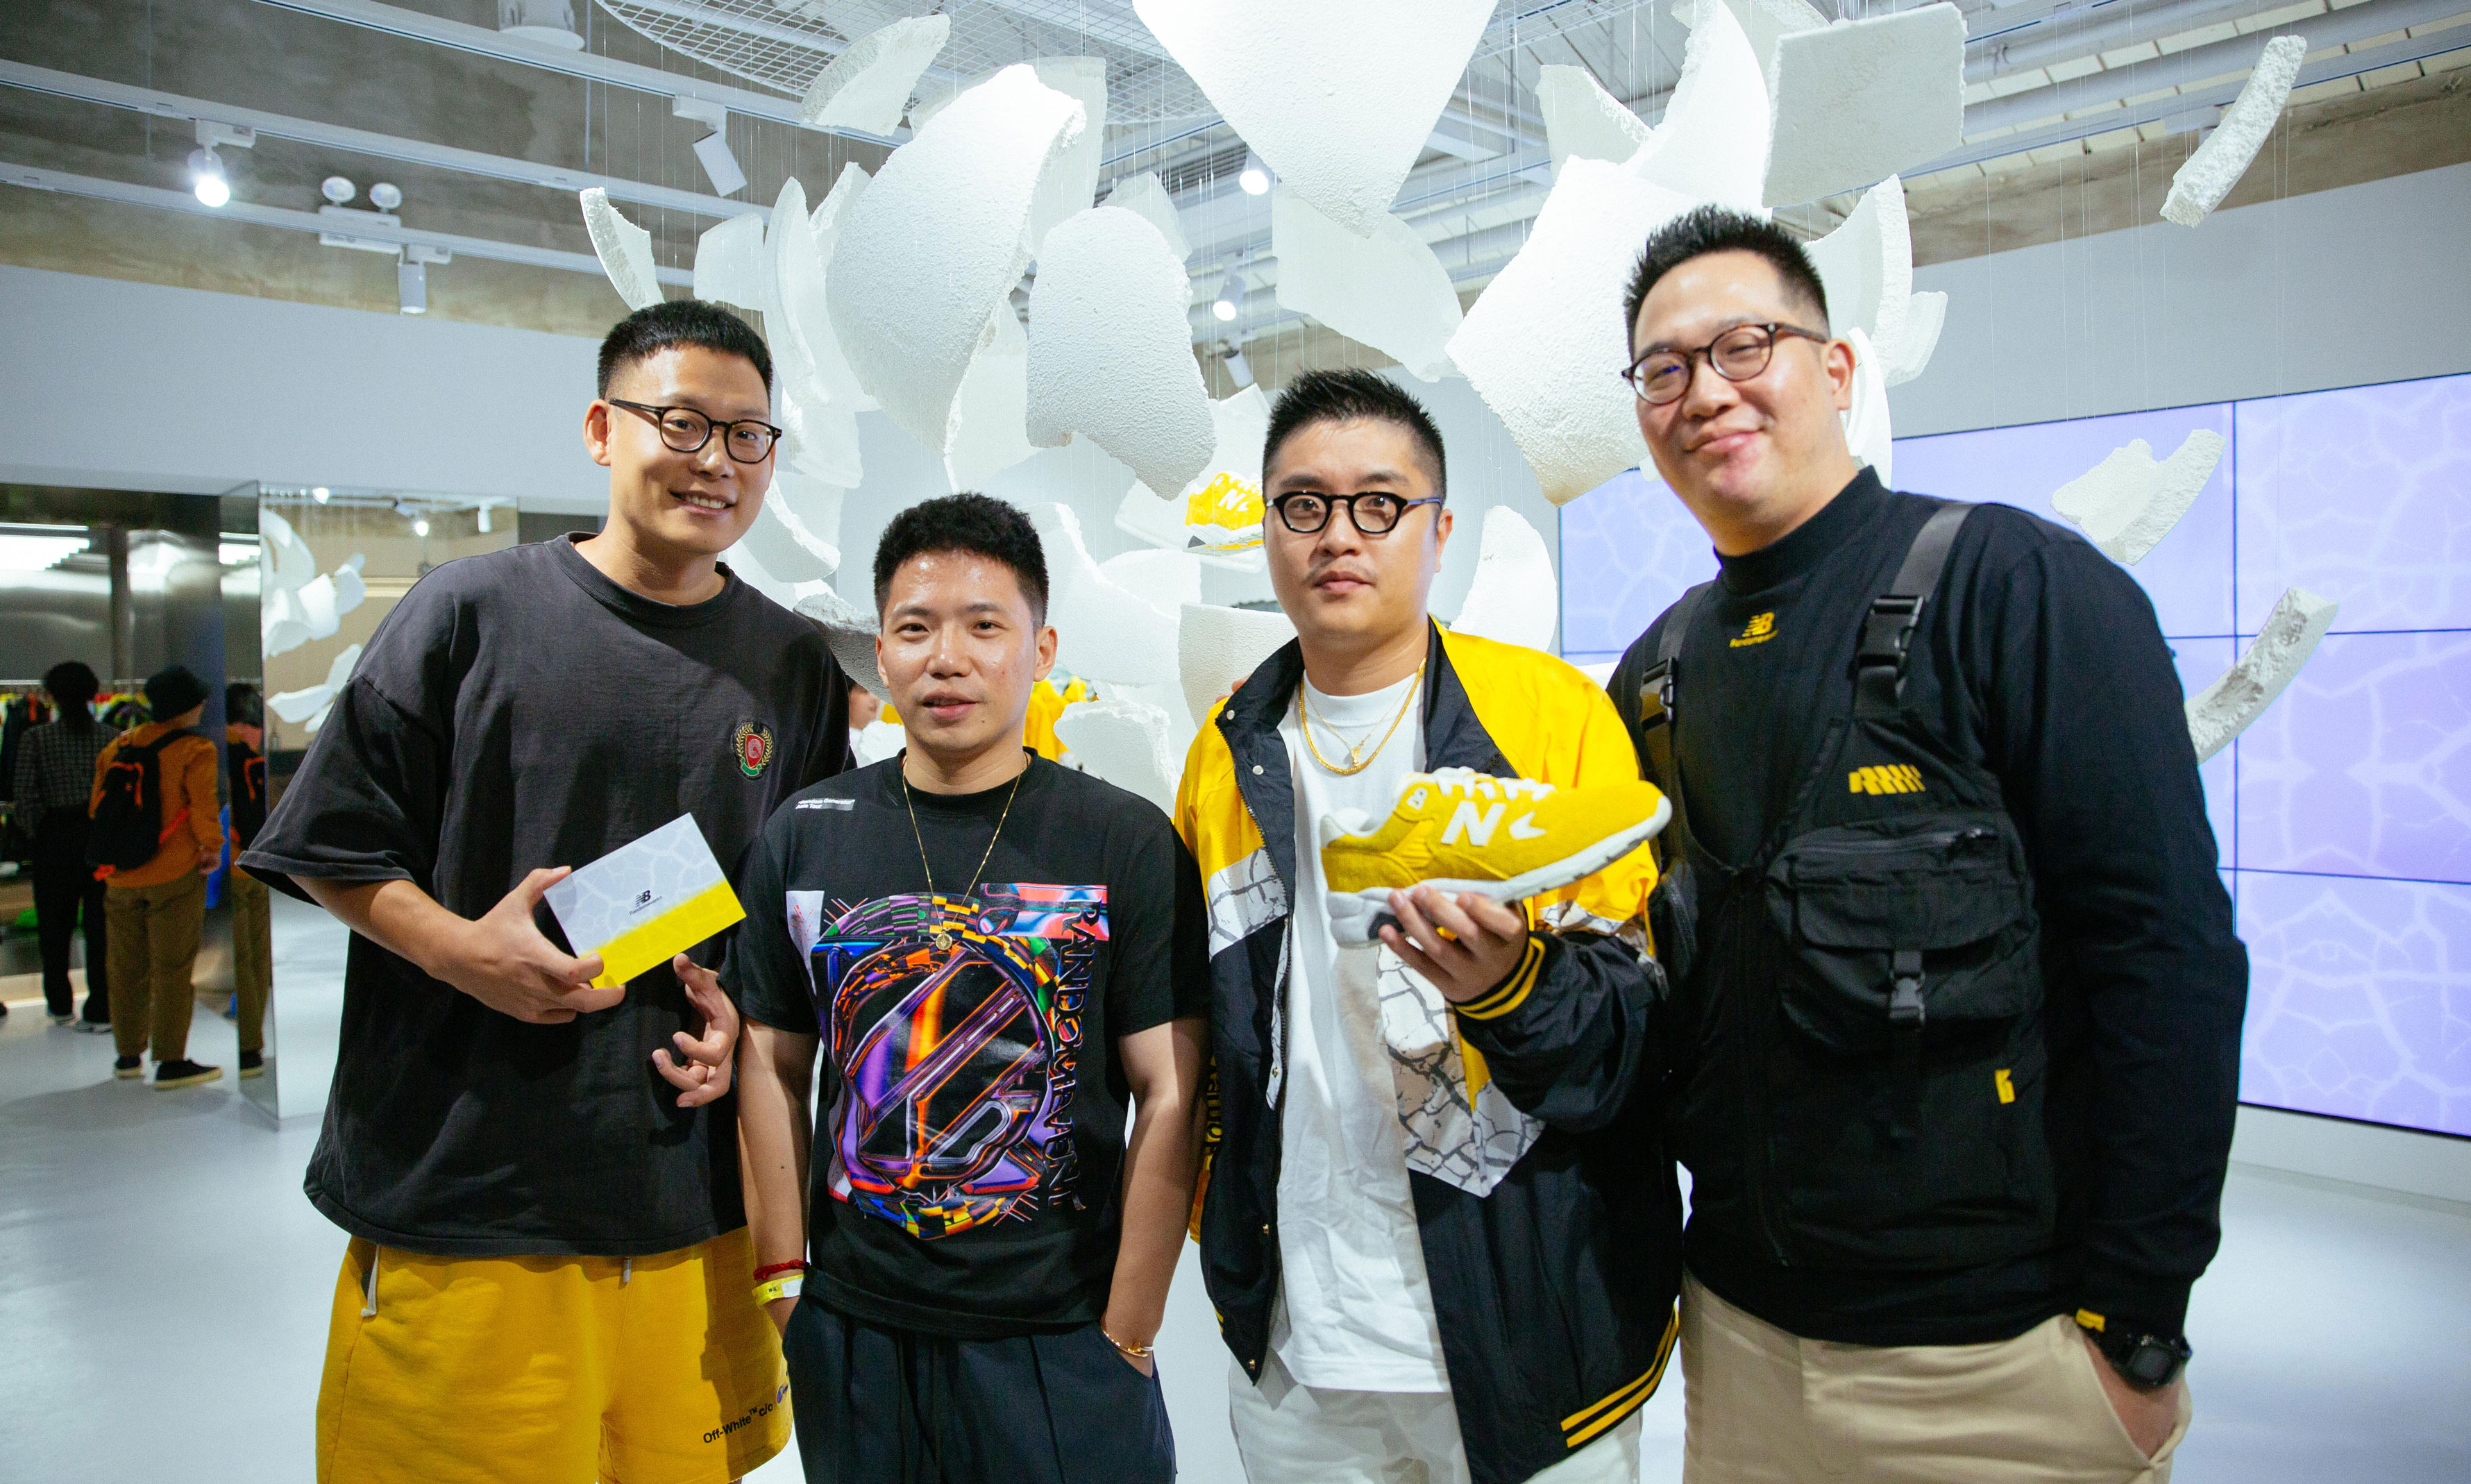 New Balance x Randomevent 于上海举办 “REBIRTH” 系列发售活动